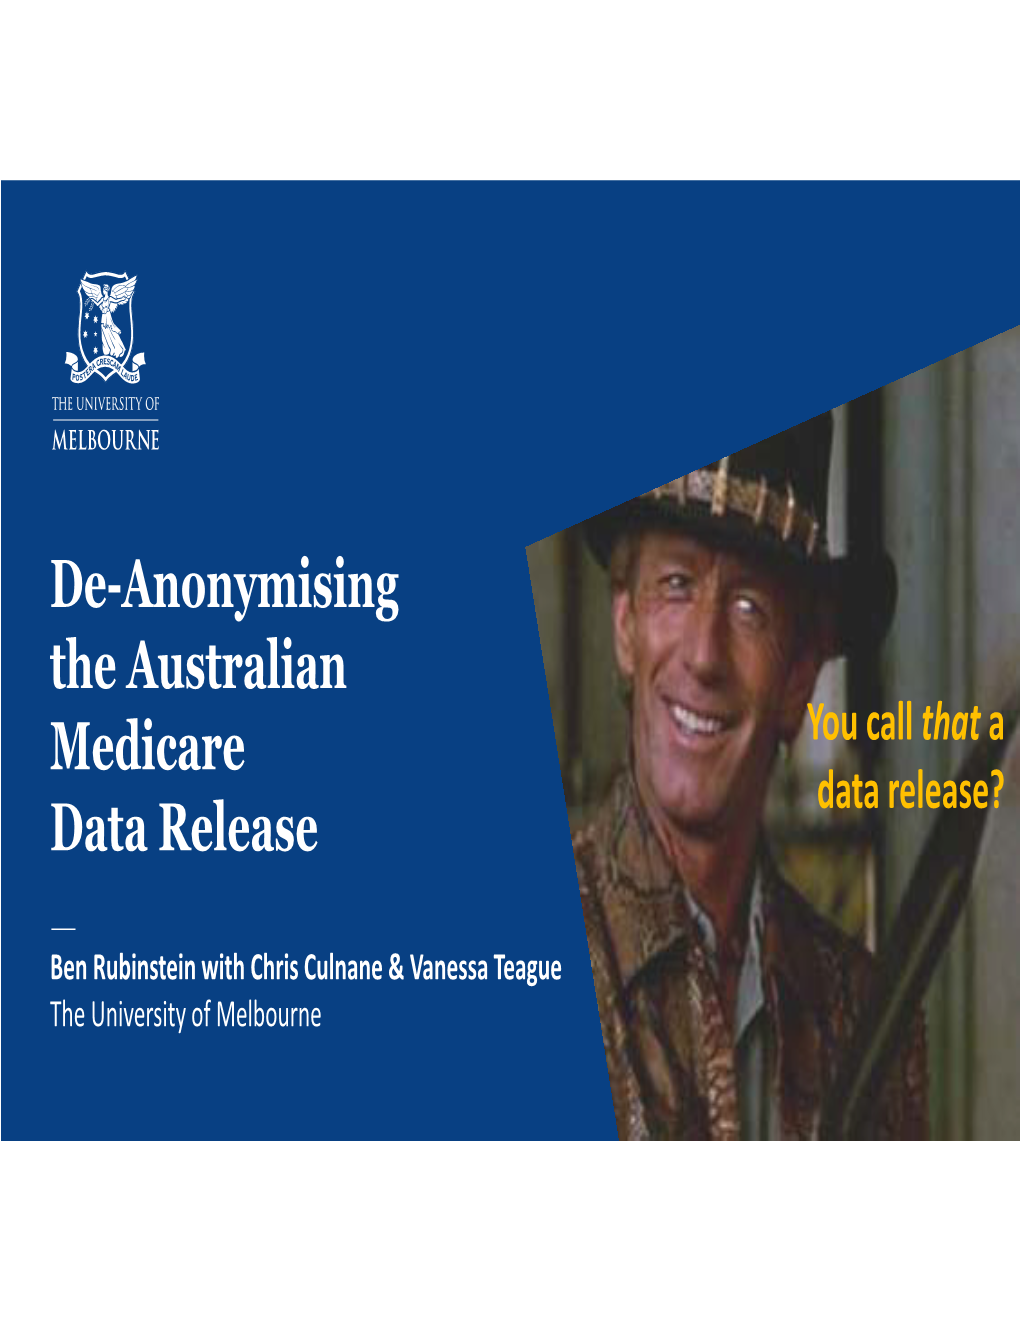 De-Anonymising the Australian Medicare Data Release